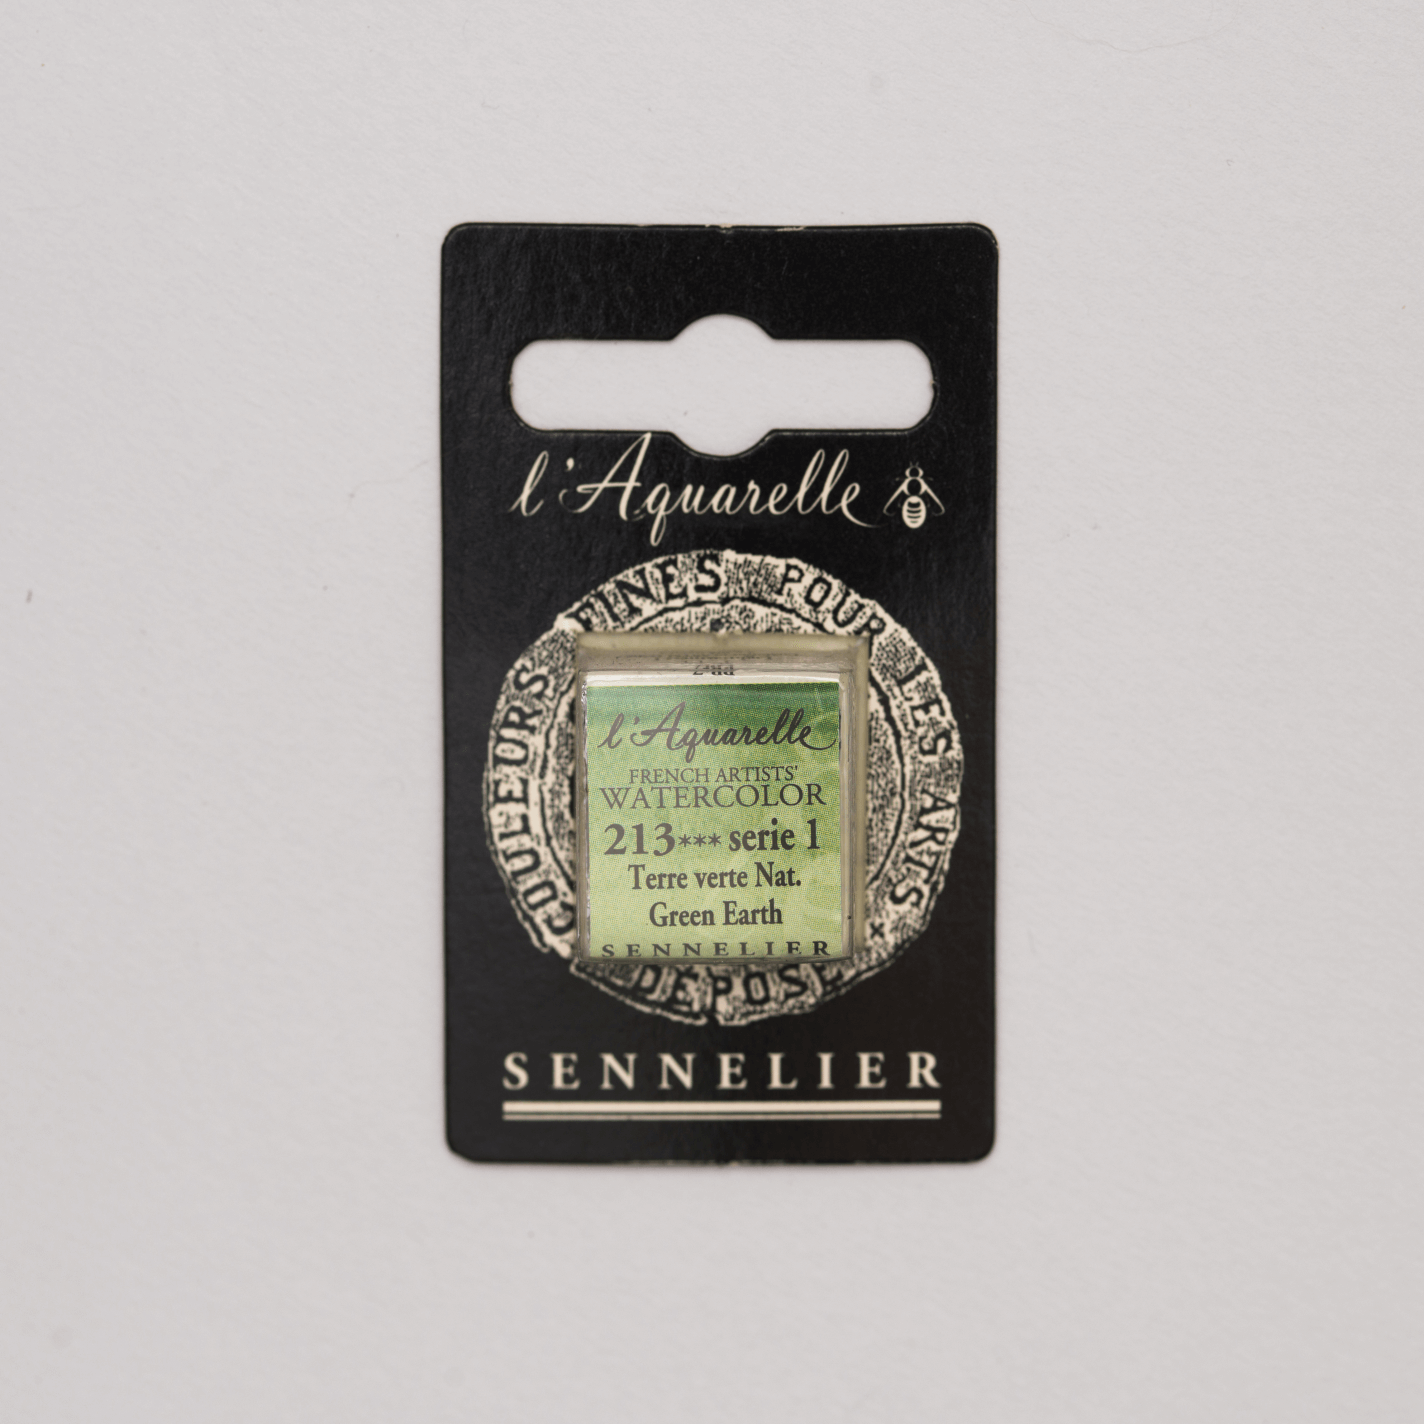 Sennelier Aquarelle pans 1/2 pan Green Earth